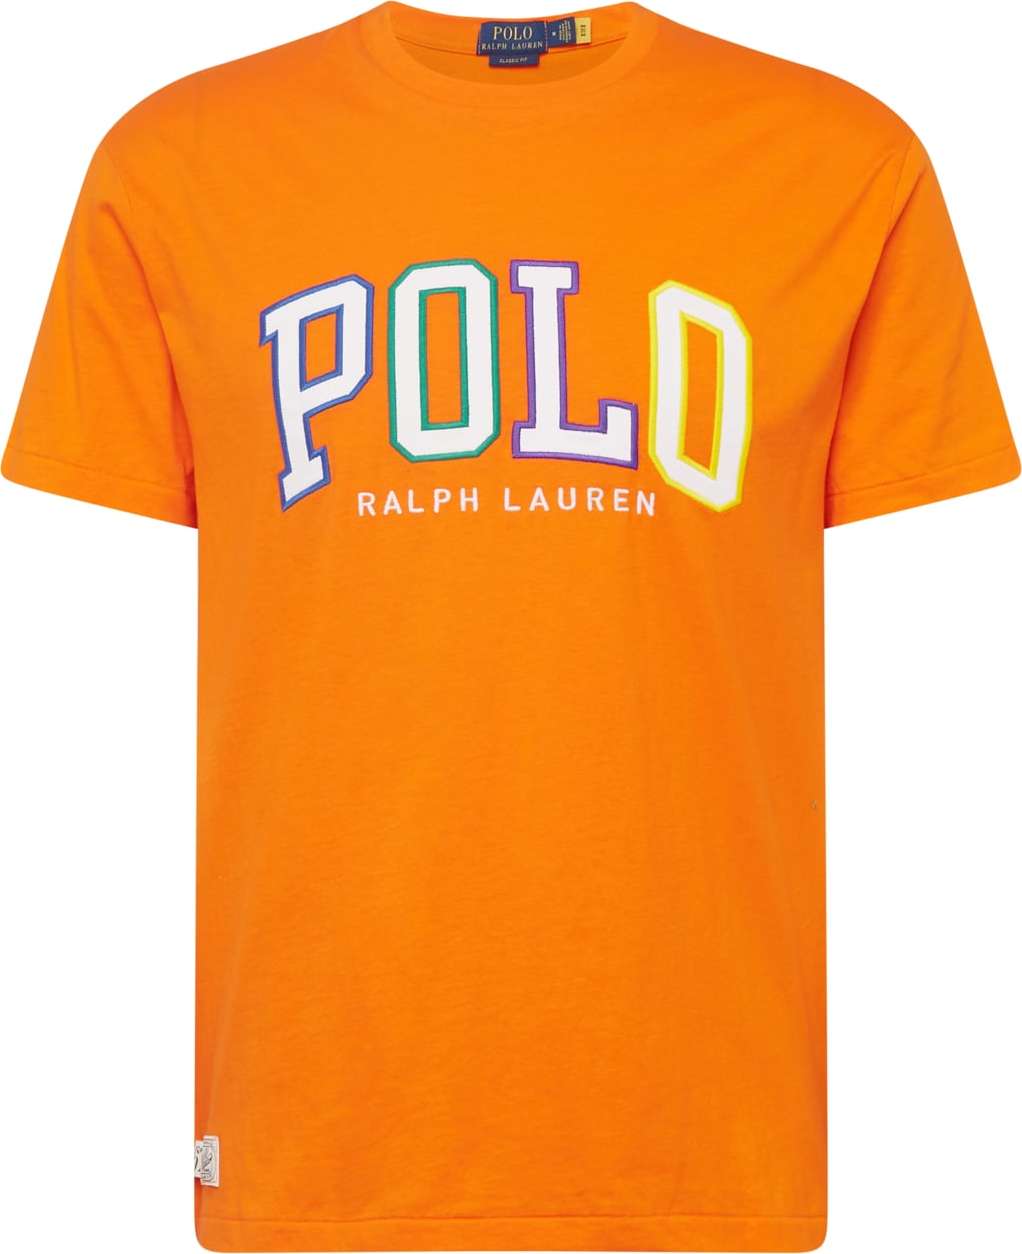 Polo Ralph Lauren Tričko žlutá / fialová / oranžová / bílá